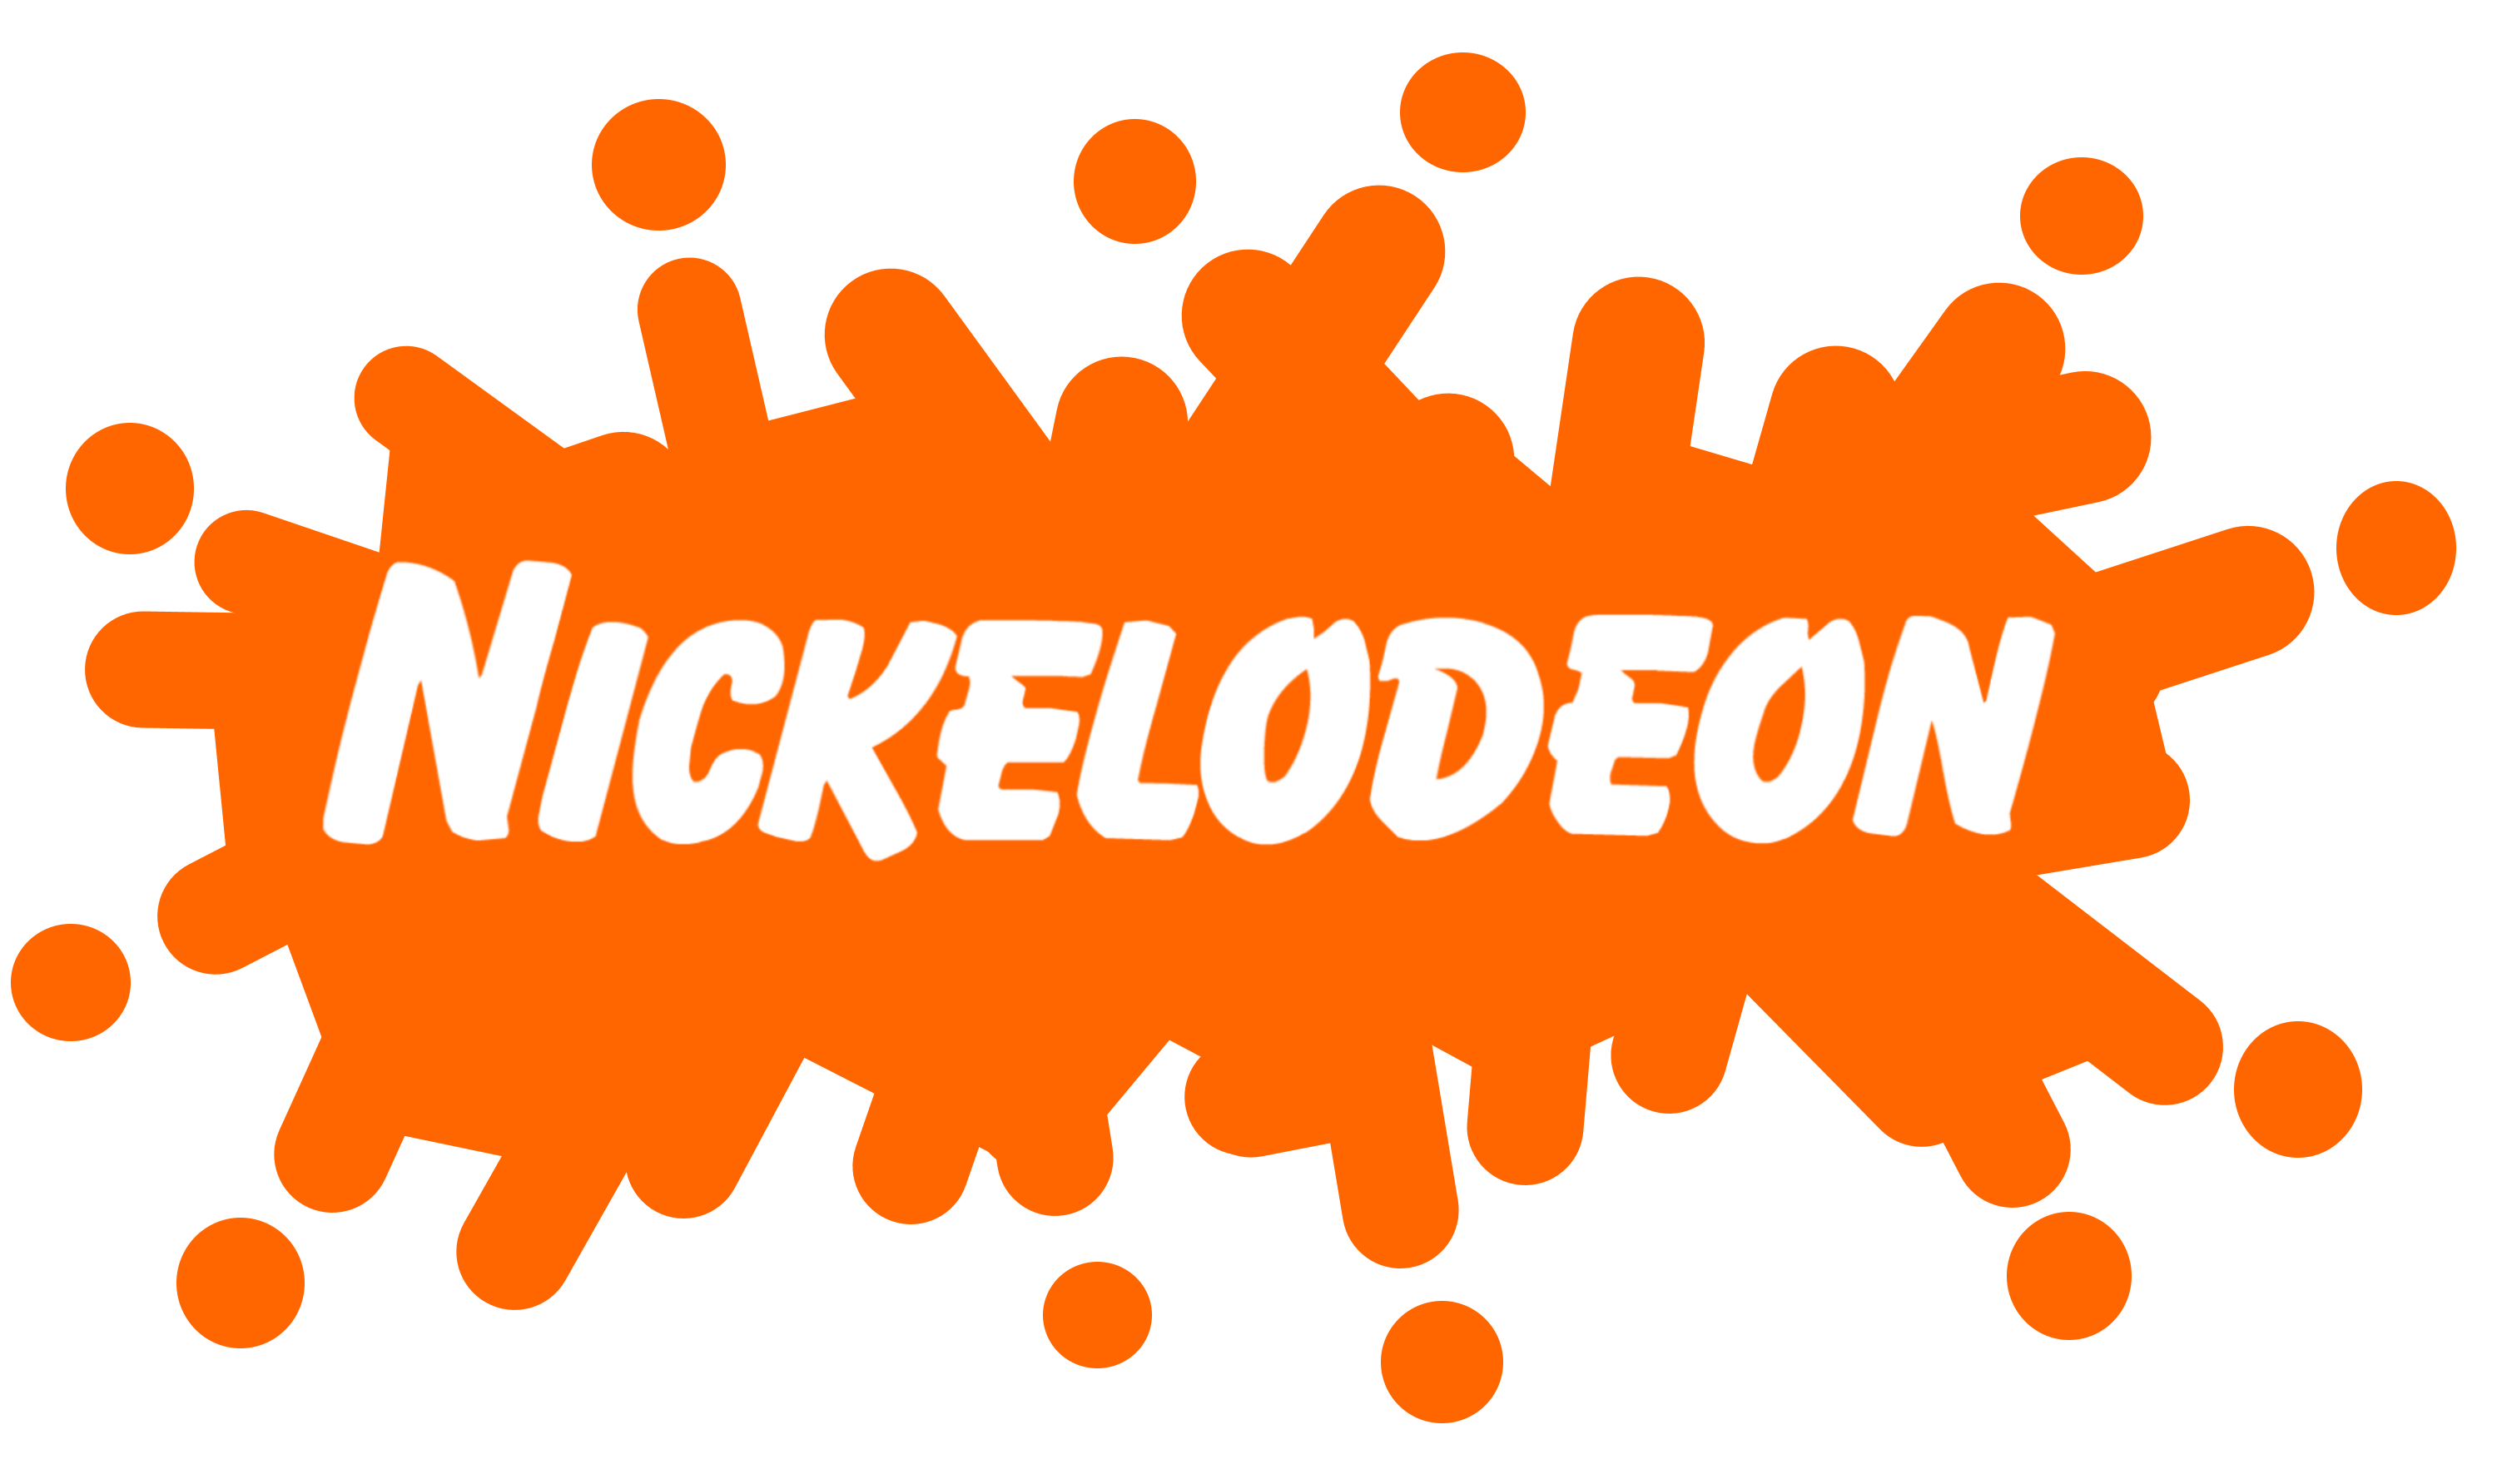 Nick channel. Канал Nickelodeon. Никелодеон логотип. Надпись Nickelodeon. Nickelodeon кляксу.